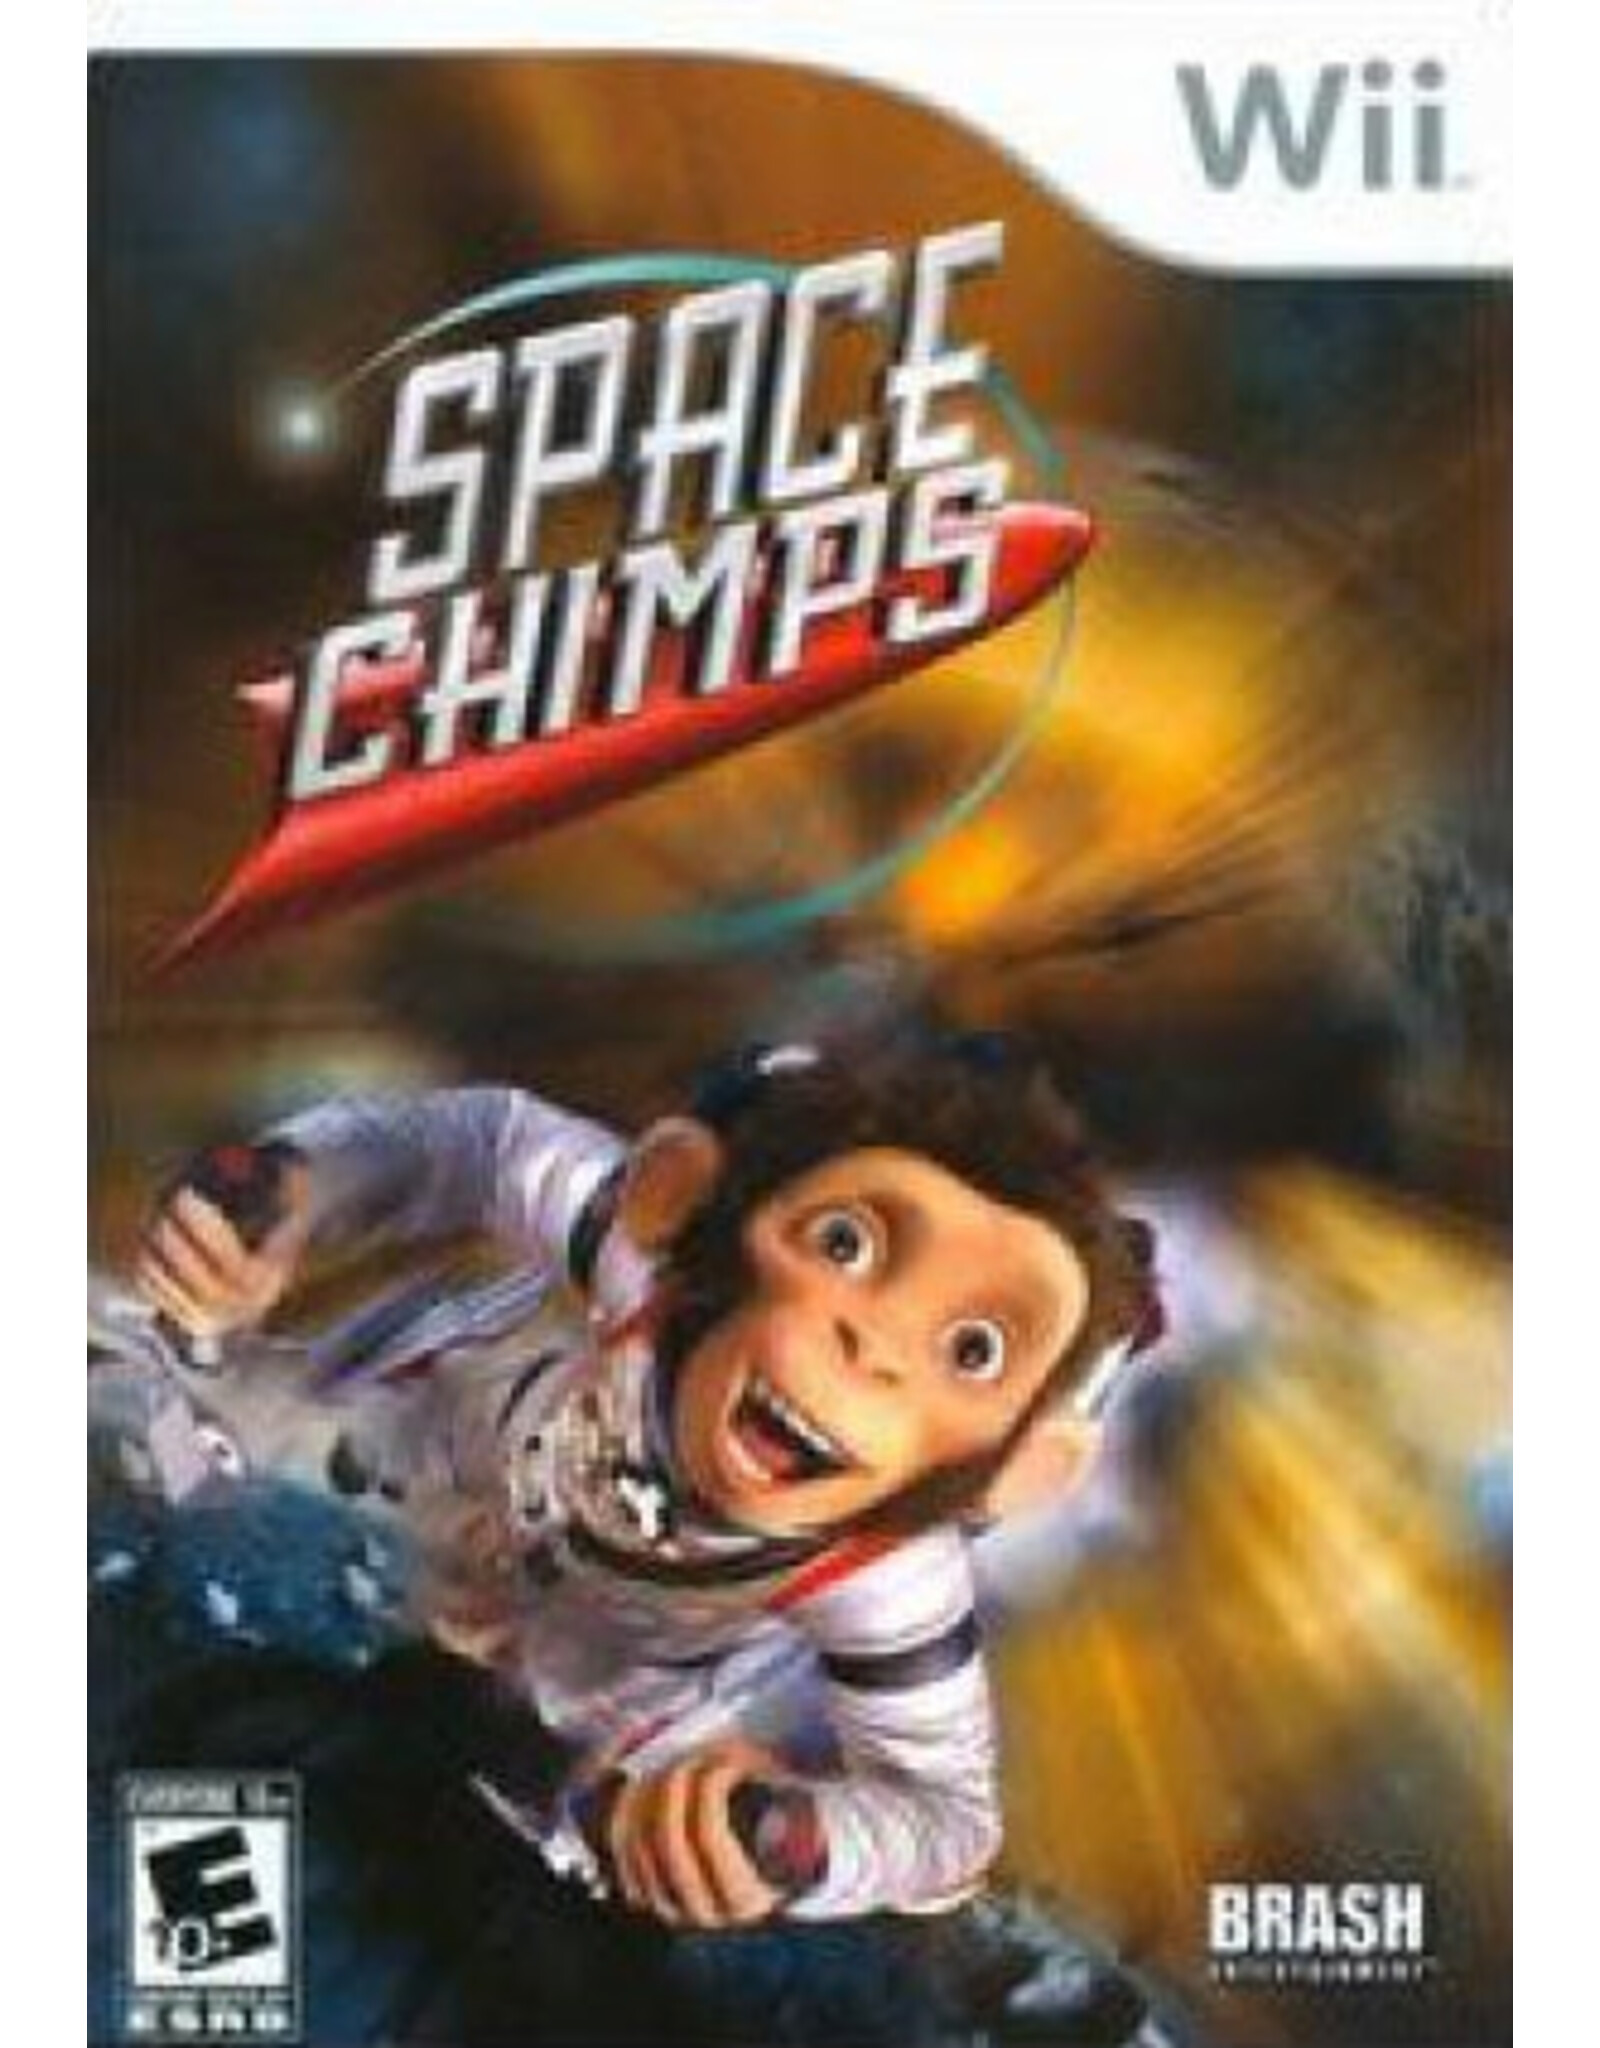 Wii Space Chimps (CiB)